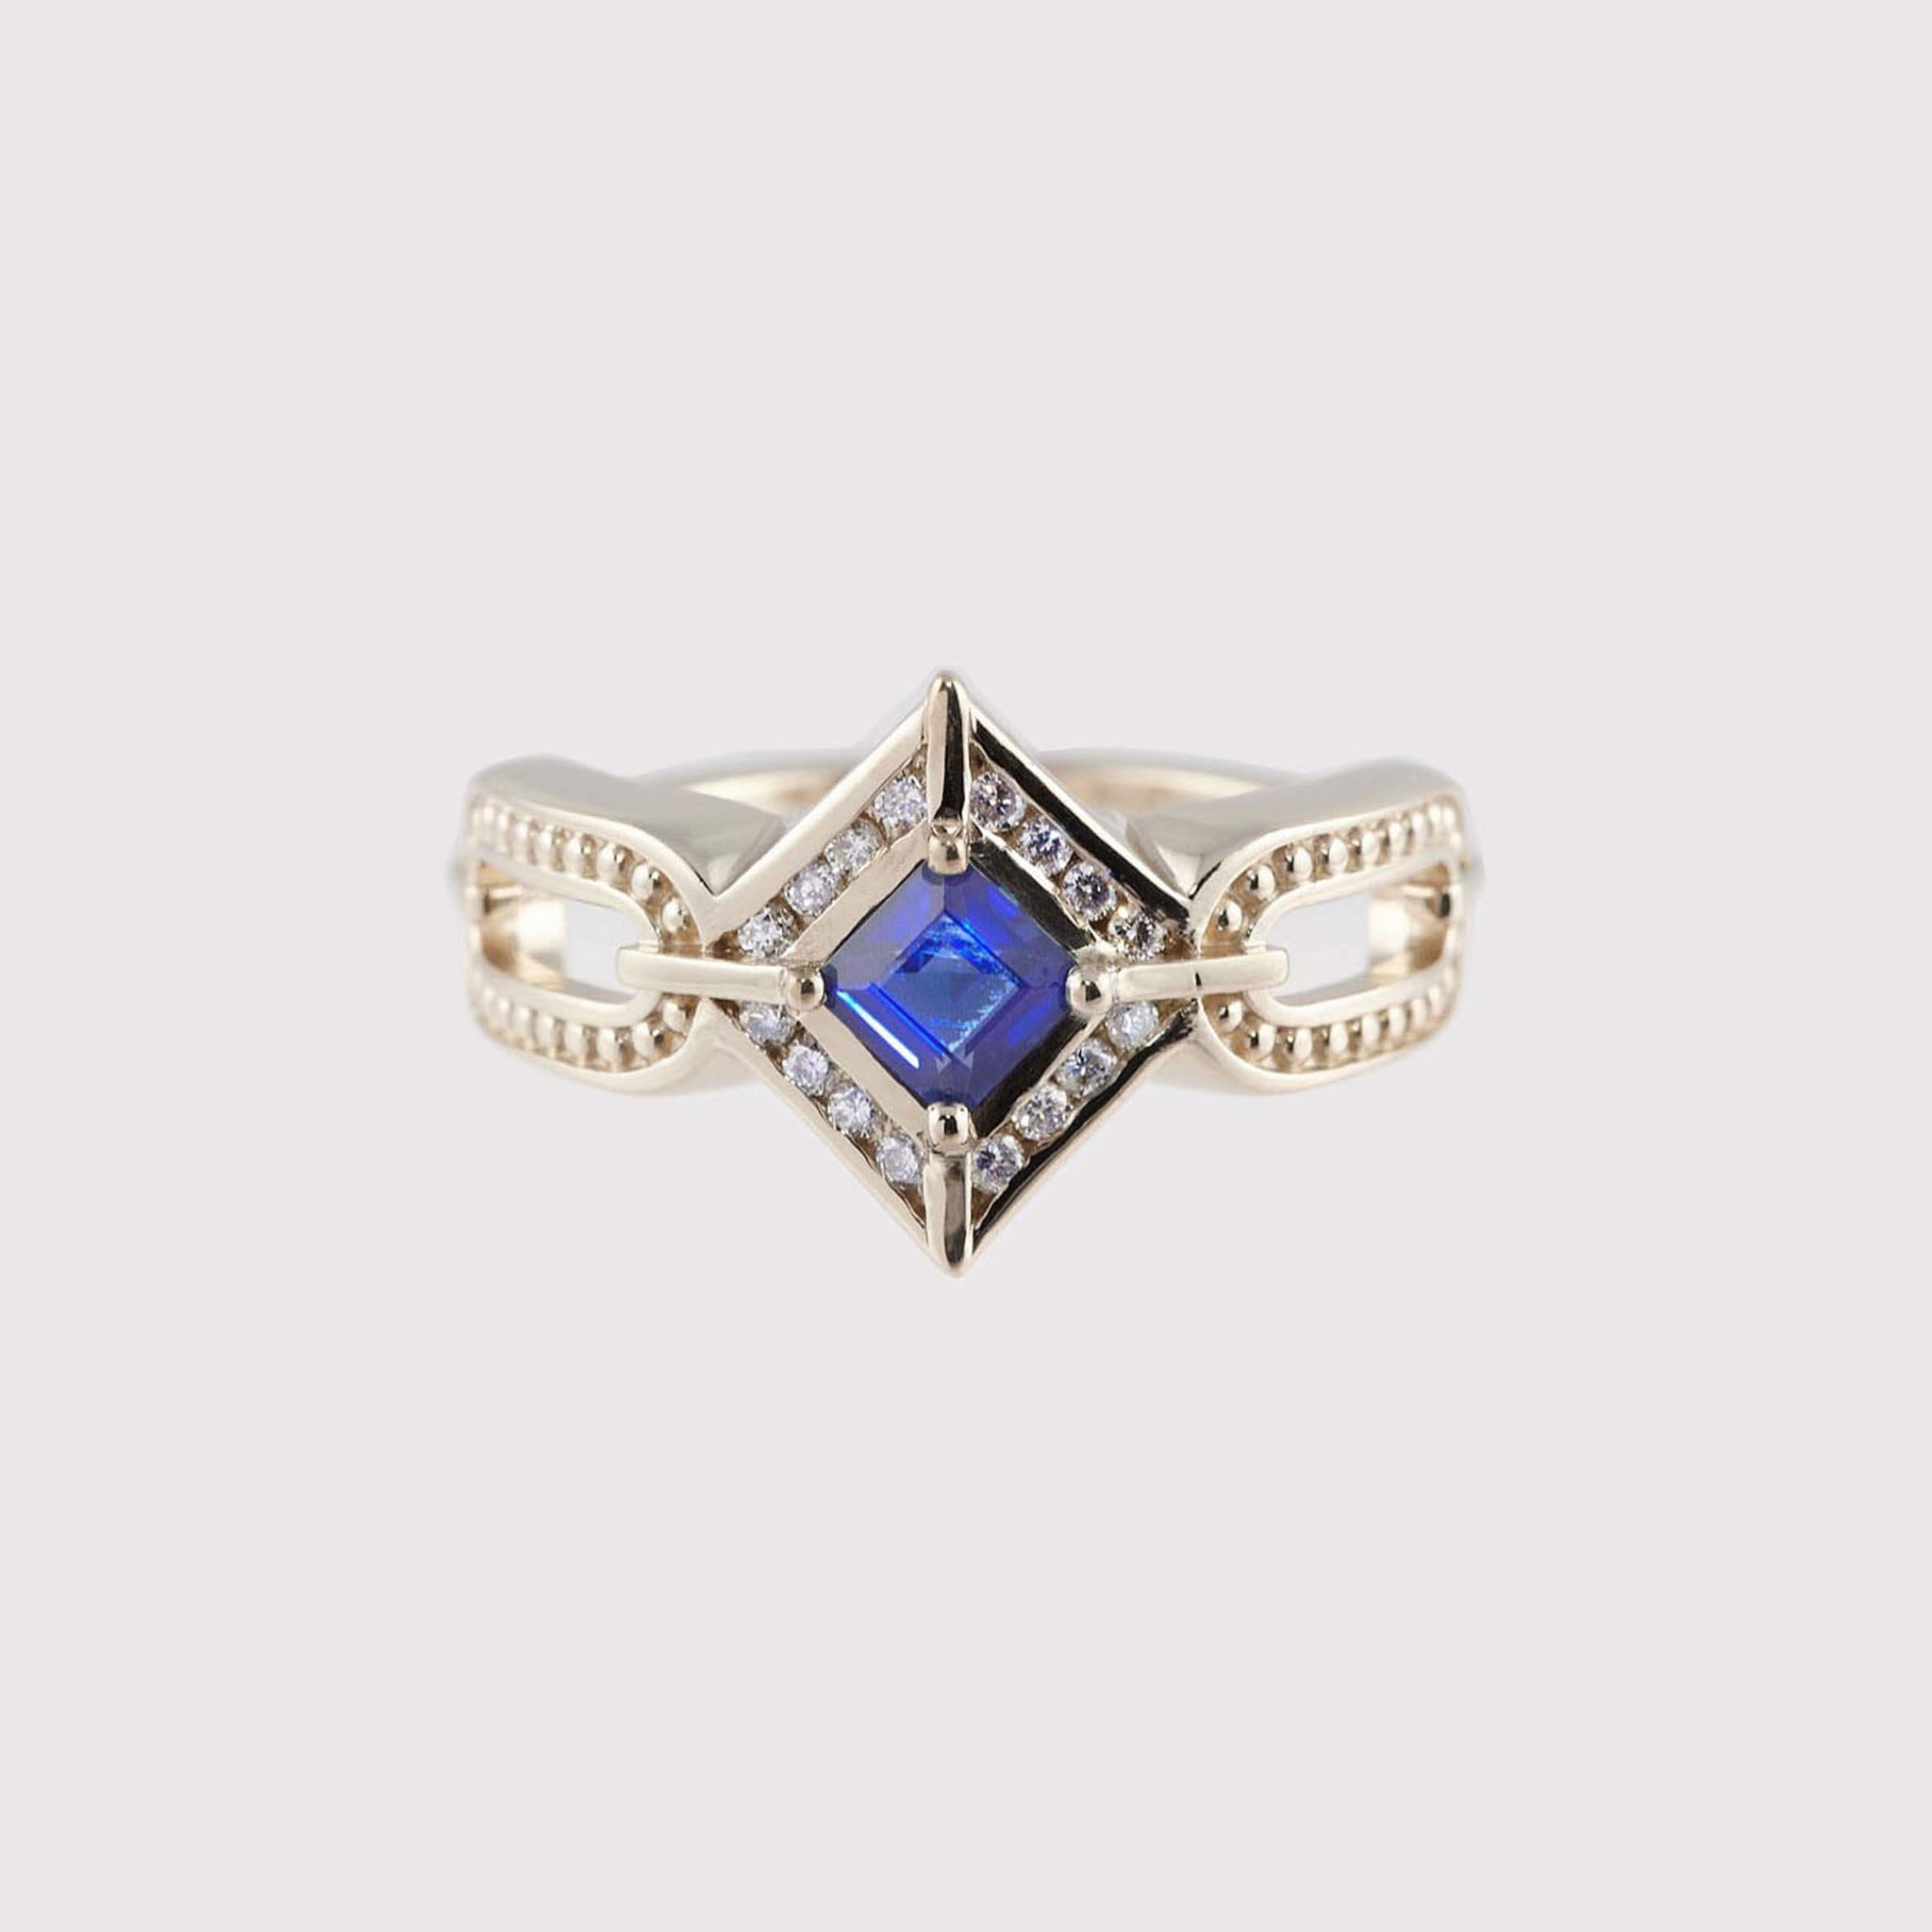 Geometric Art Deco engagement ring with princess cut brilliant blue sapphire